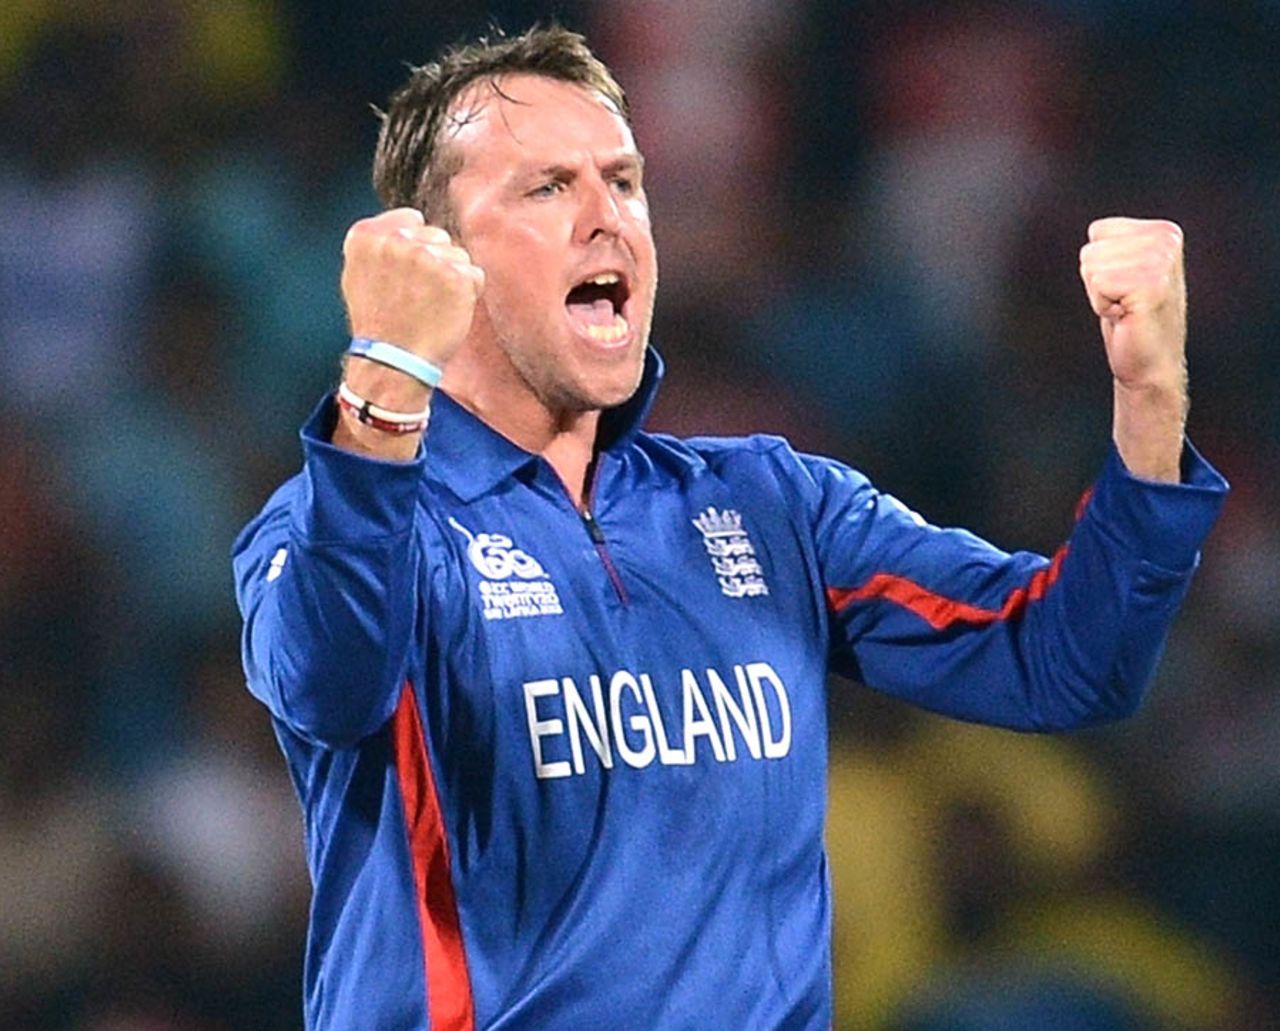 Graeme Swann celebrates after taking a wicket, Sri Lanka v England, Super Eights, World Twenty20, Pallekele, October 1, 2012